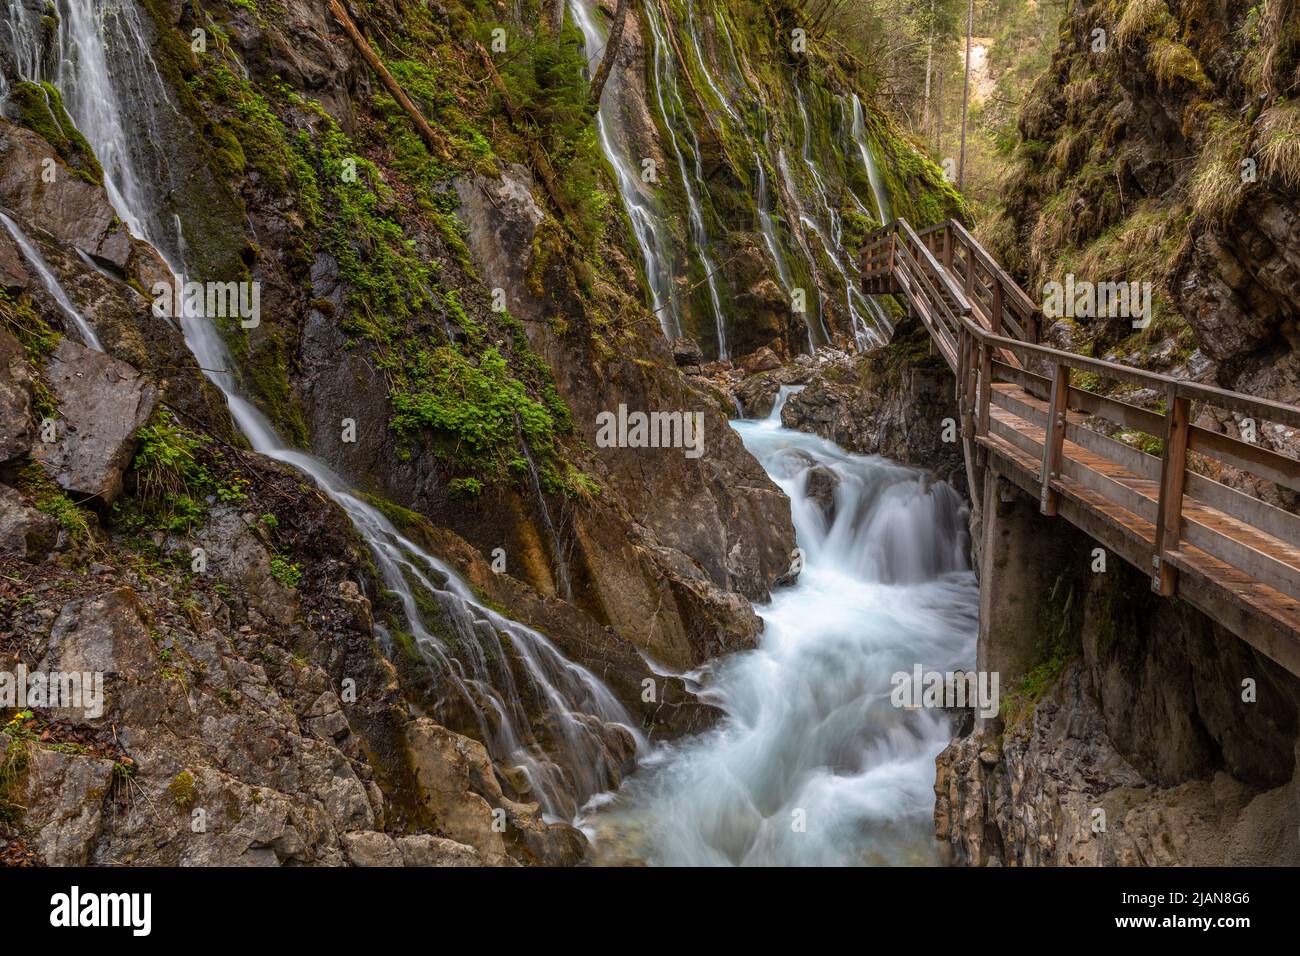 Wimbachklamm gorge in Ramsau near Berchtesgaden, Bavaria, Germany Stock Photo